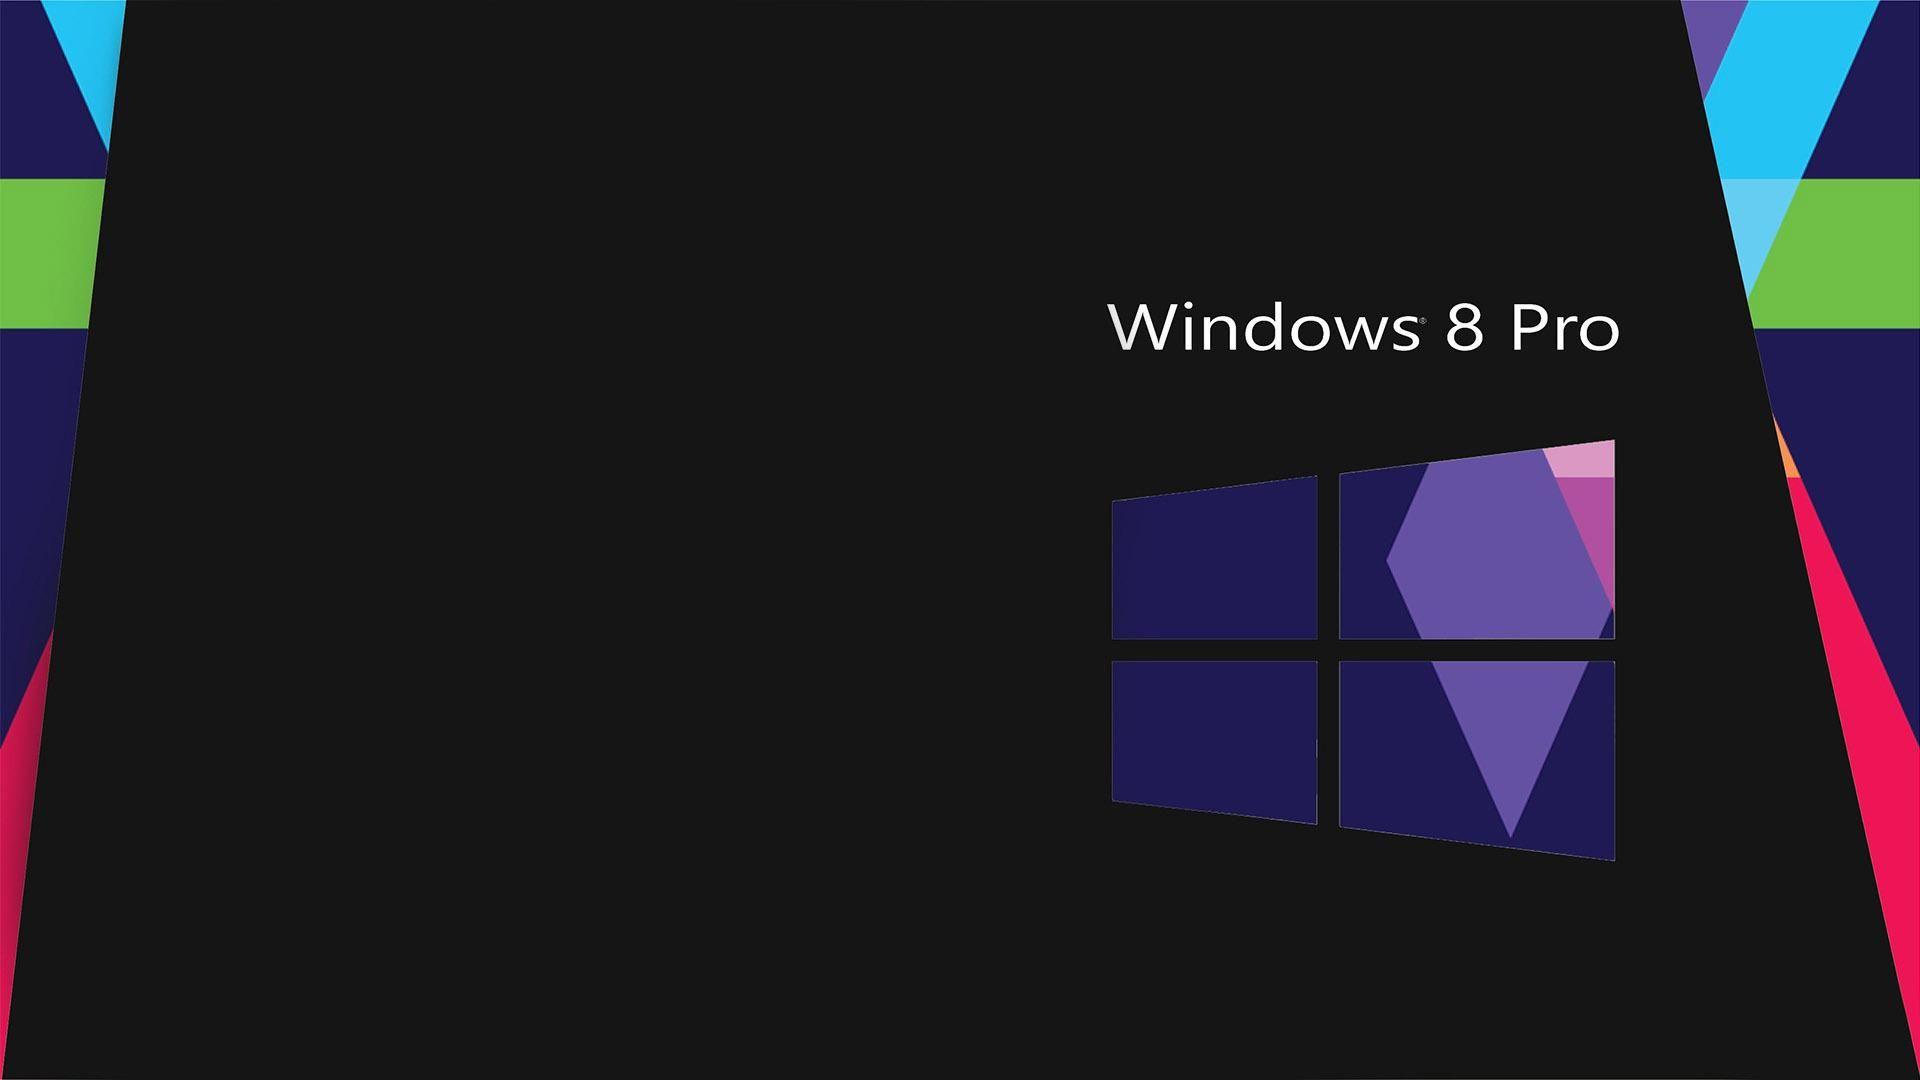 Windows 8 Pro wallpaper. brands and logos